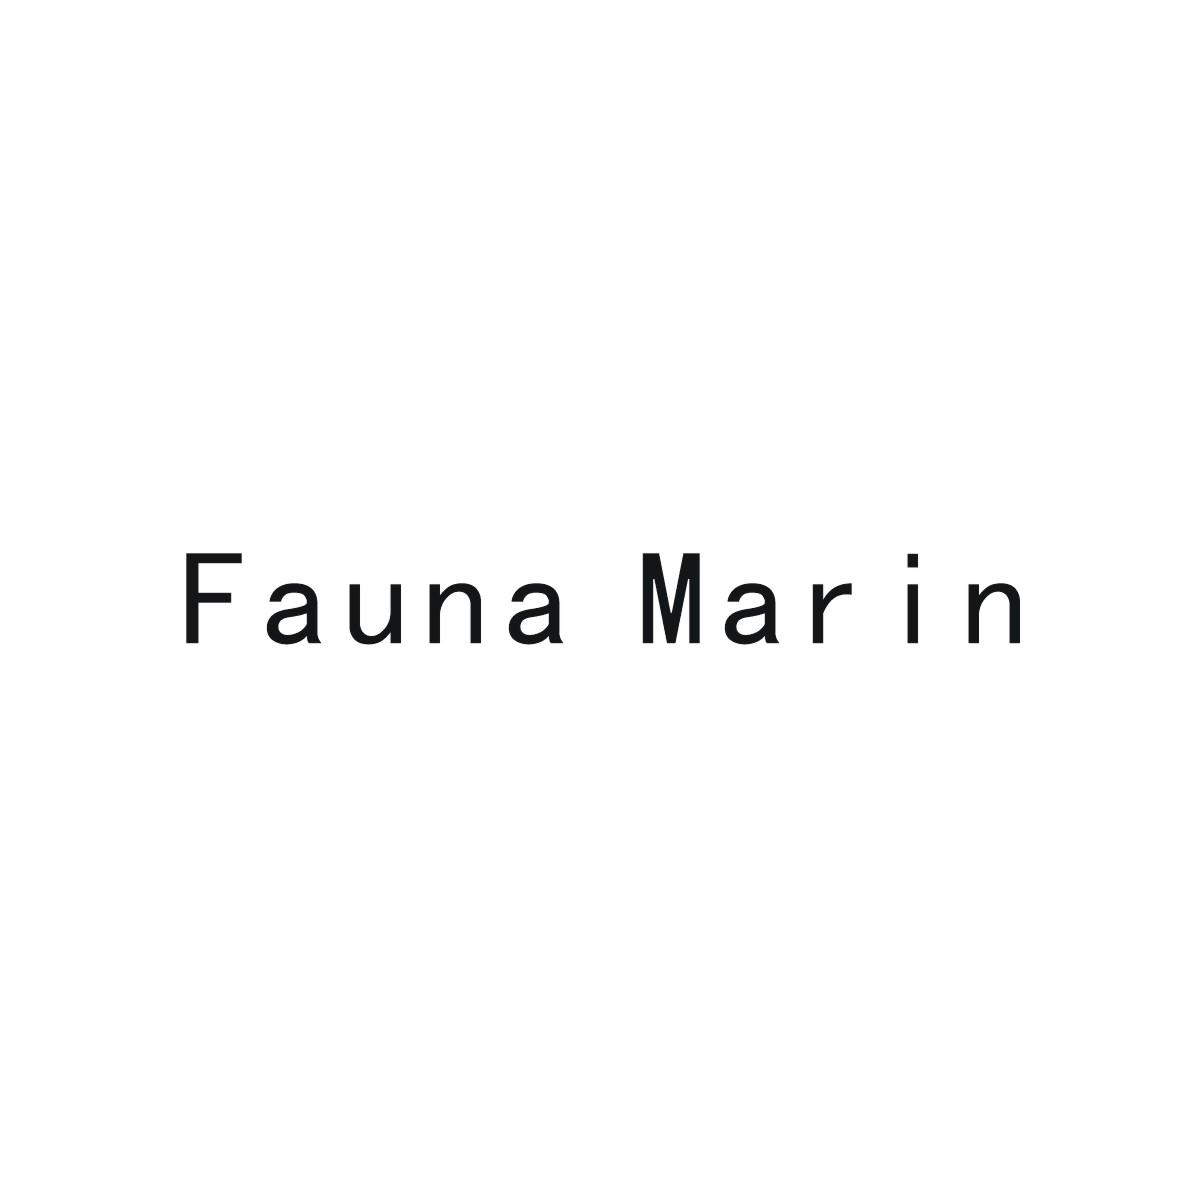 Fauna Marin饲养备料商标转让费用买卖交易流程